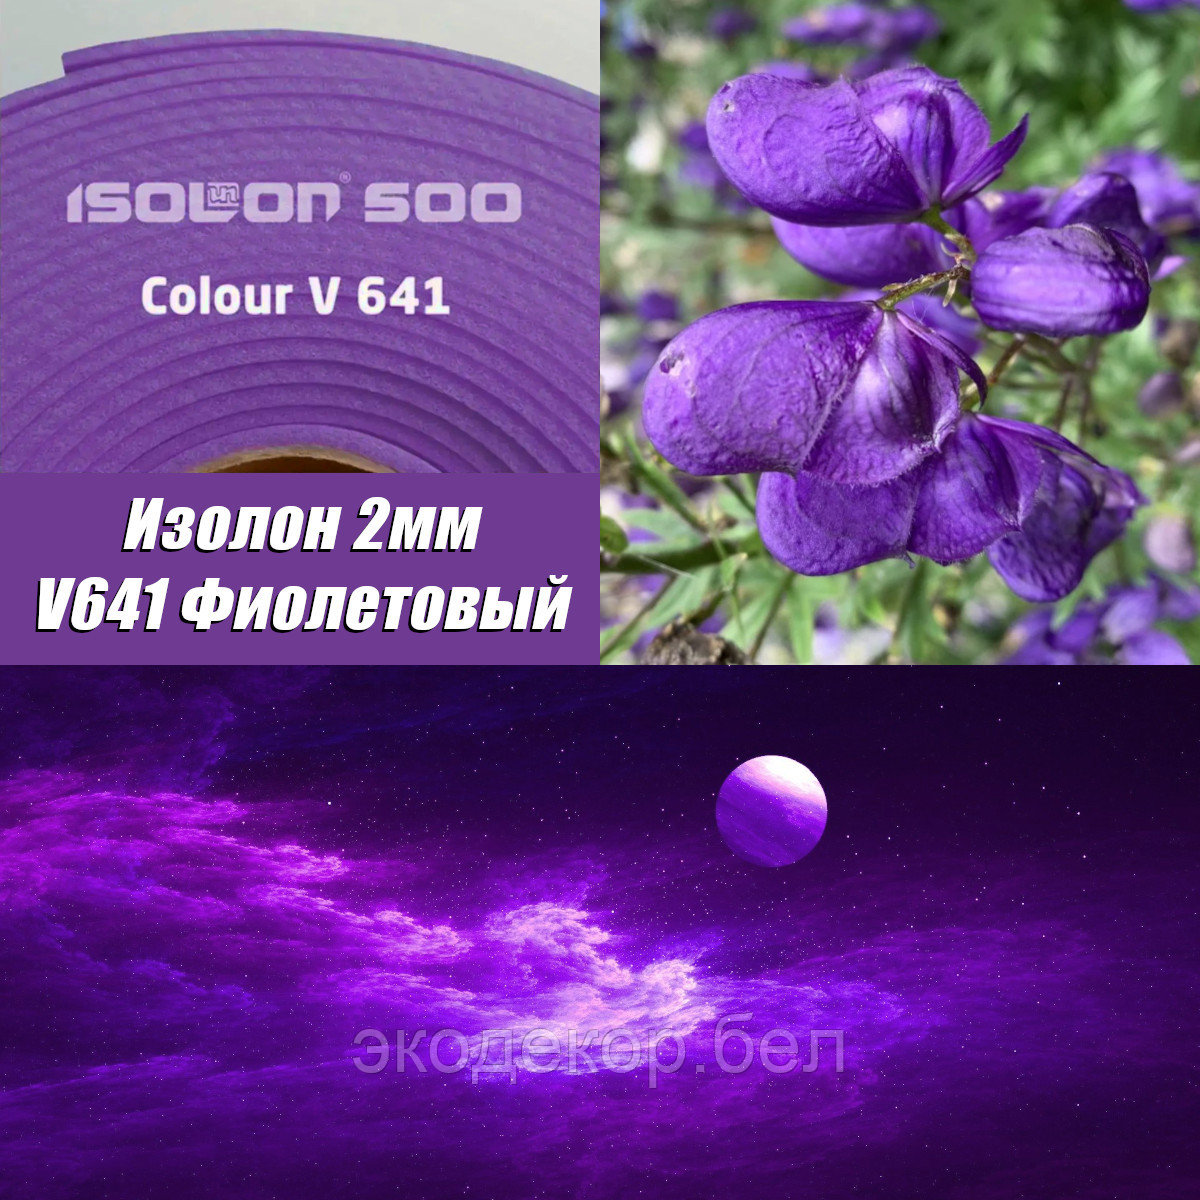 Isolon 500 (Изолон) 0,75м. V641 Фиолетовый, 2мм